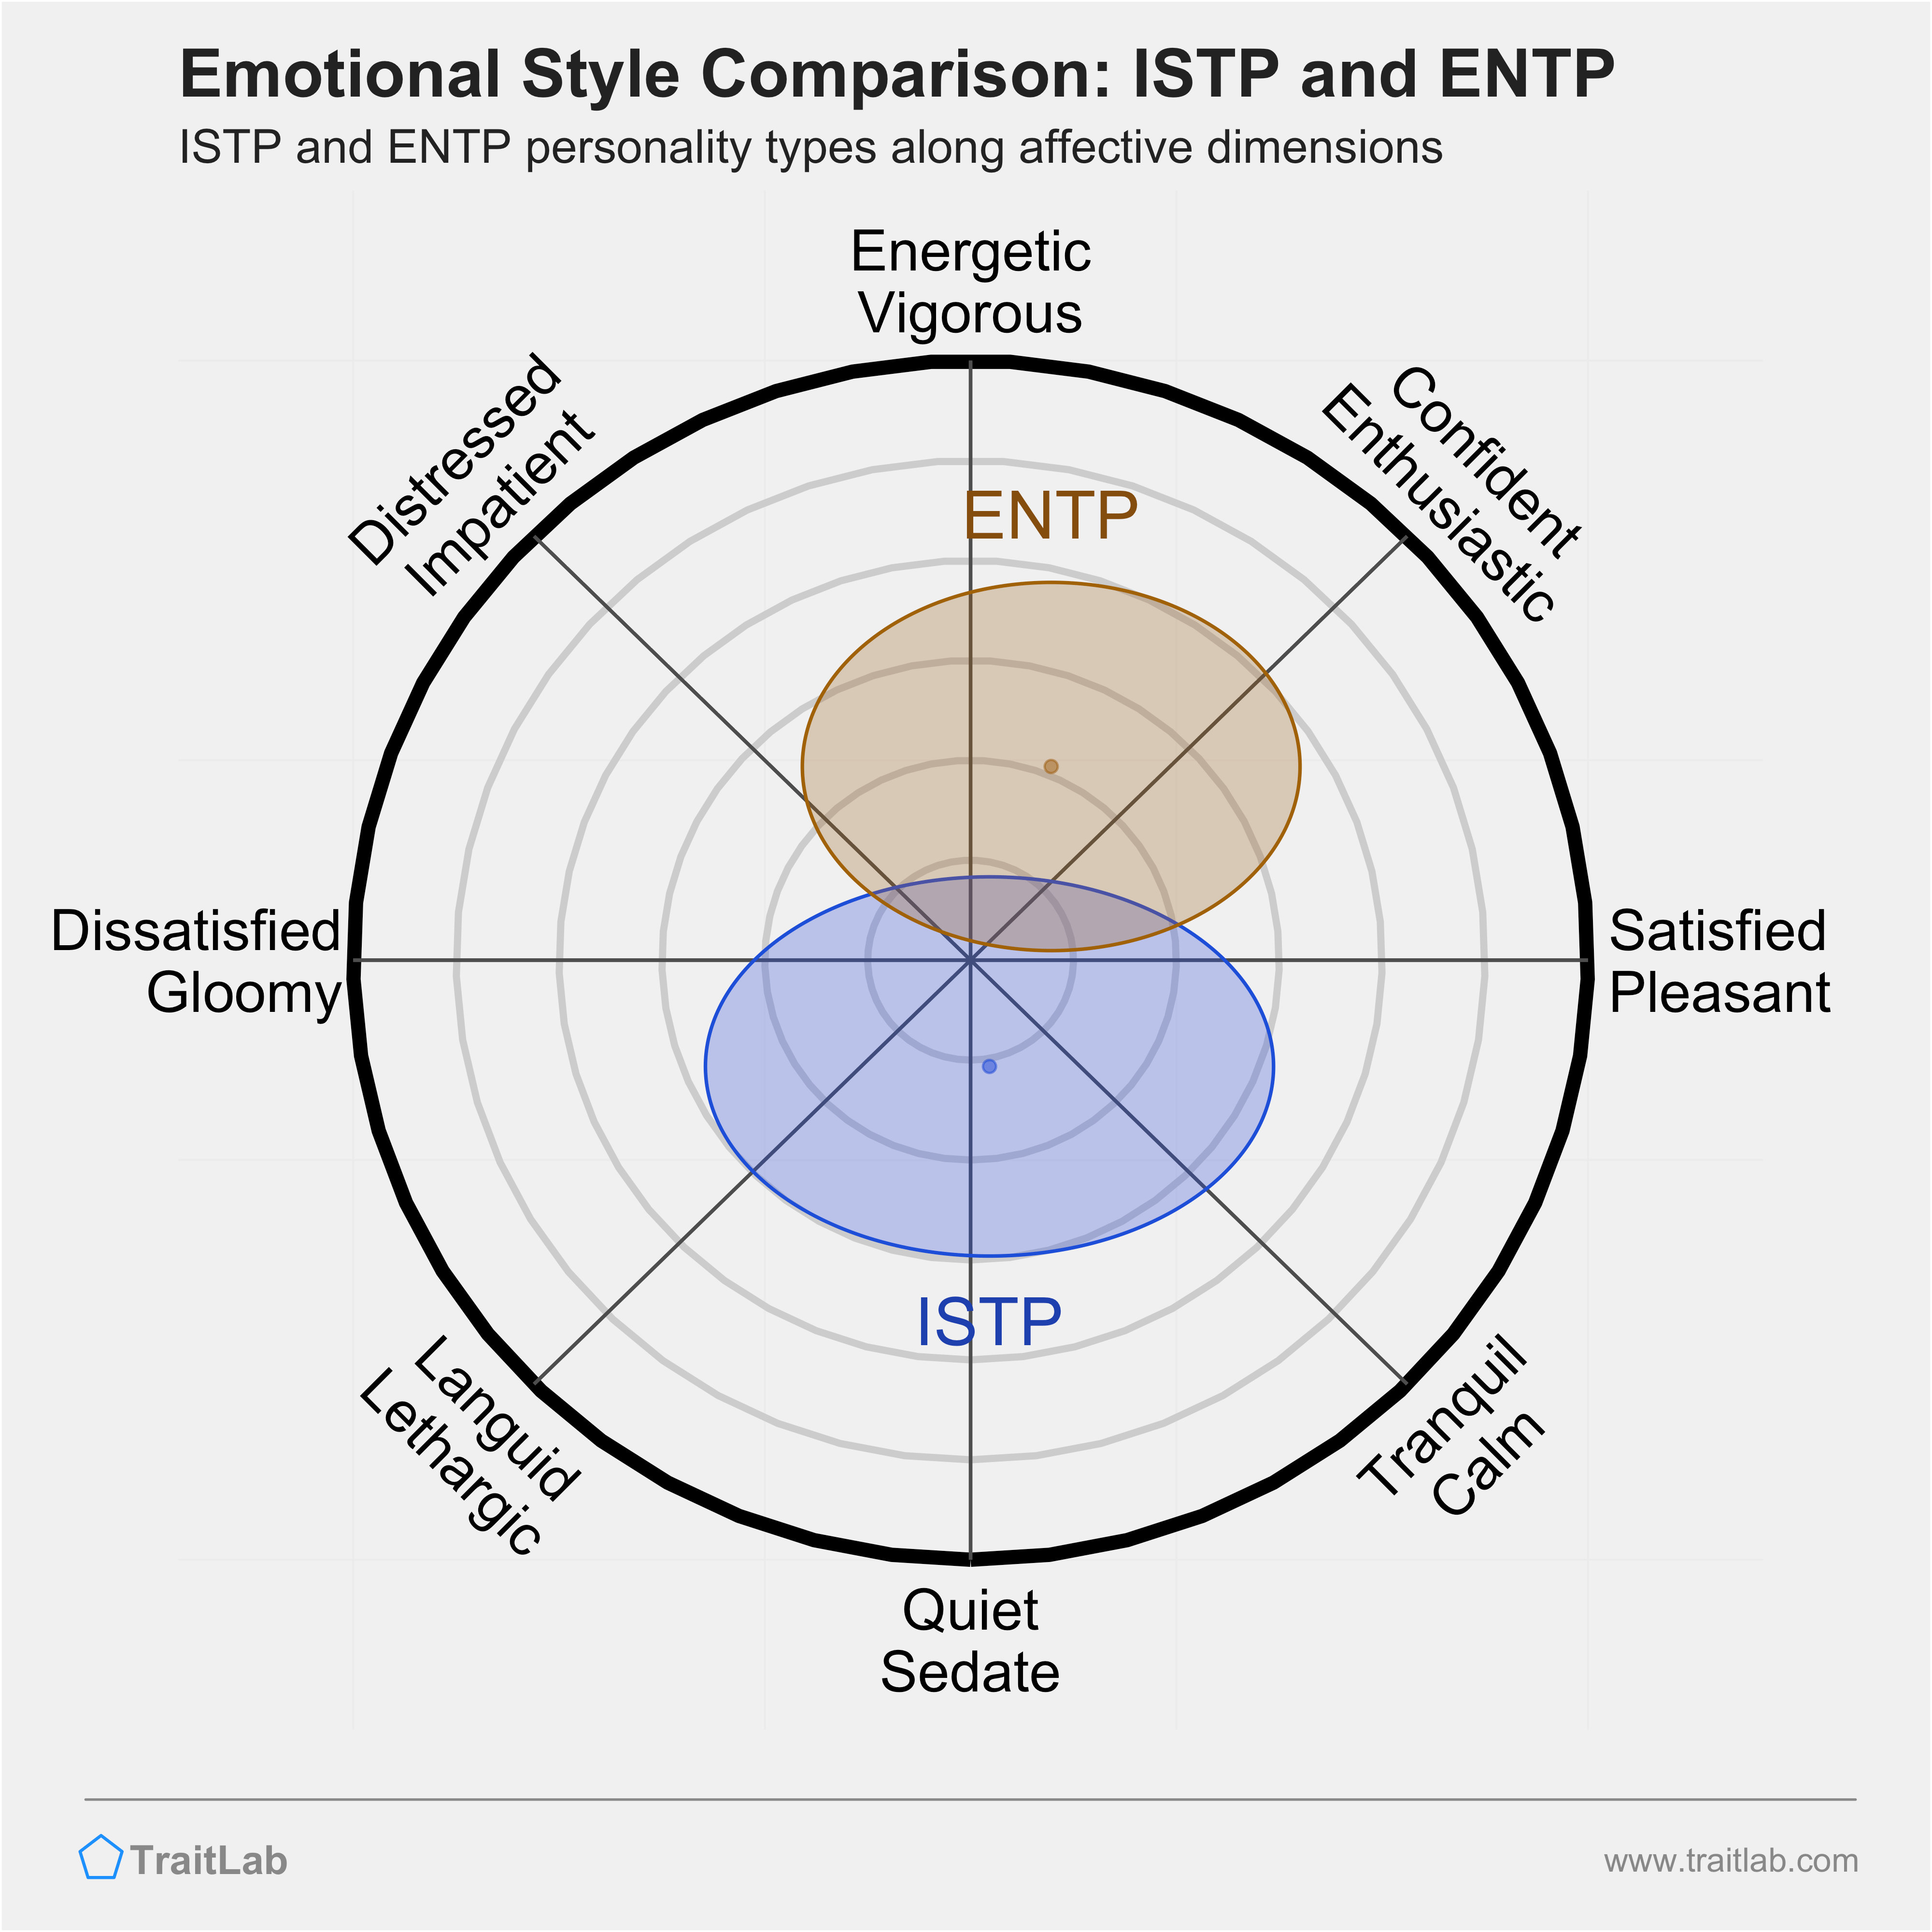 ISTP and ENTP comparison across emotional (affective) dimensions